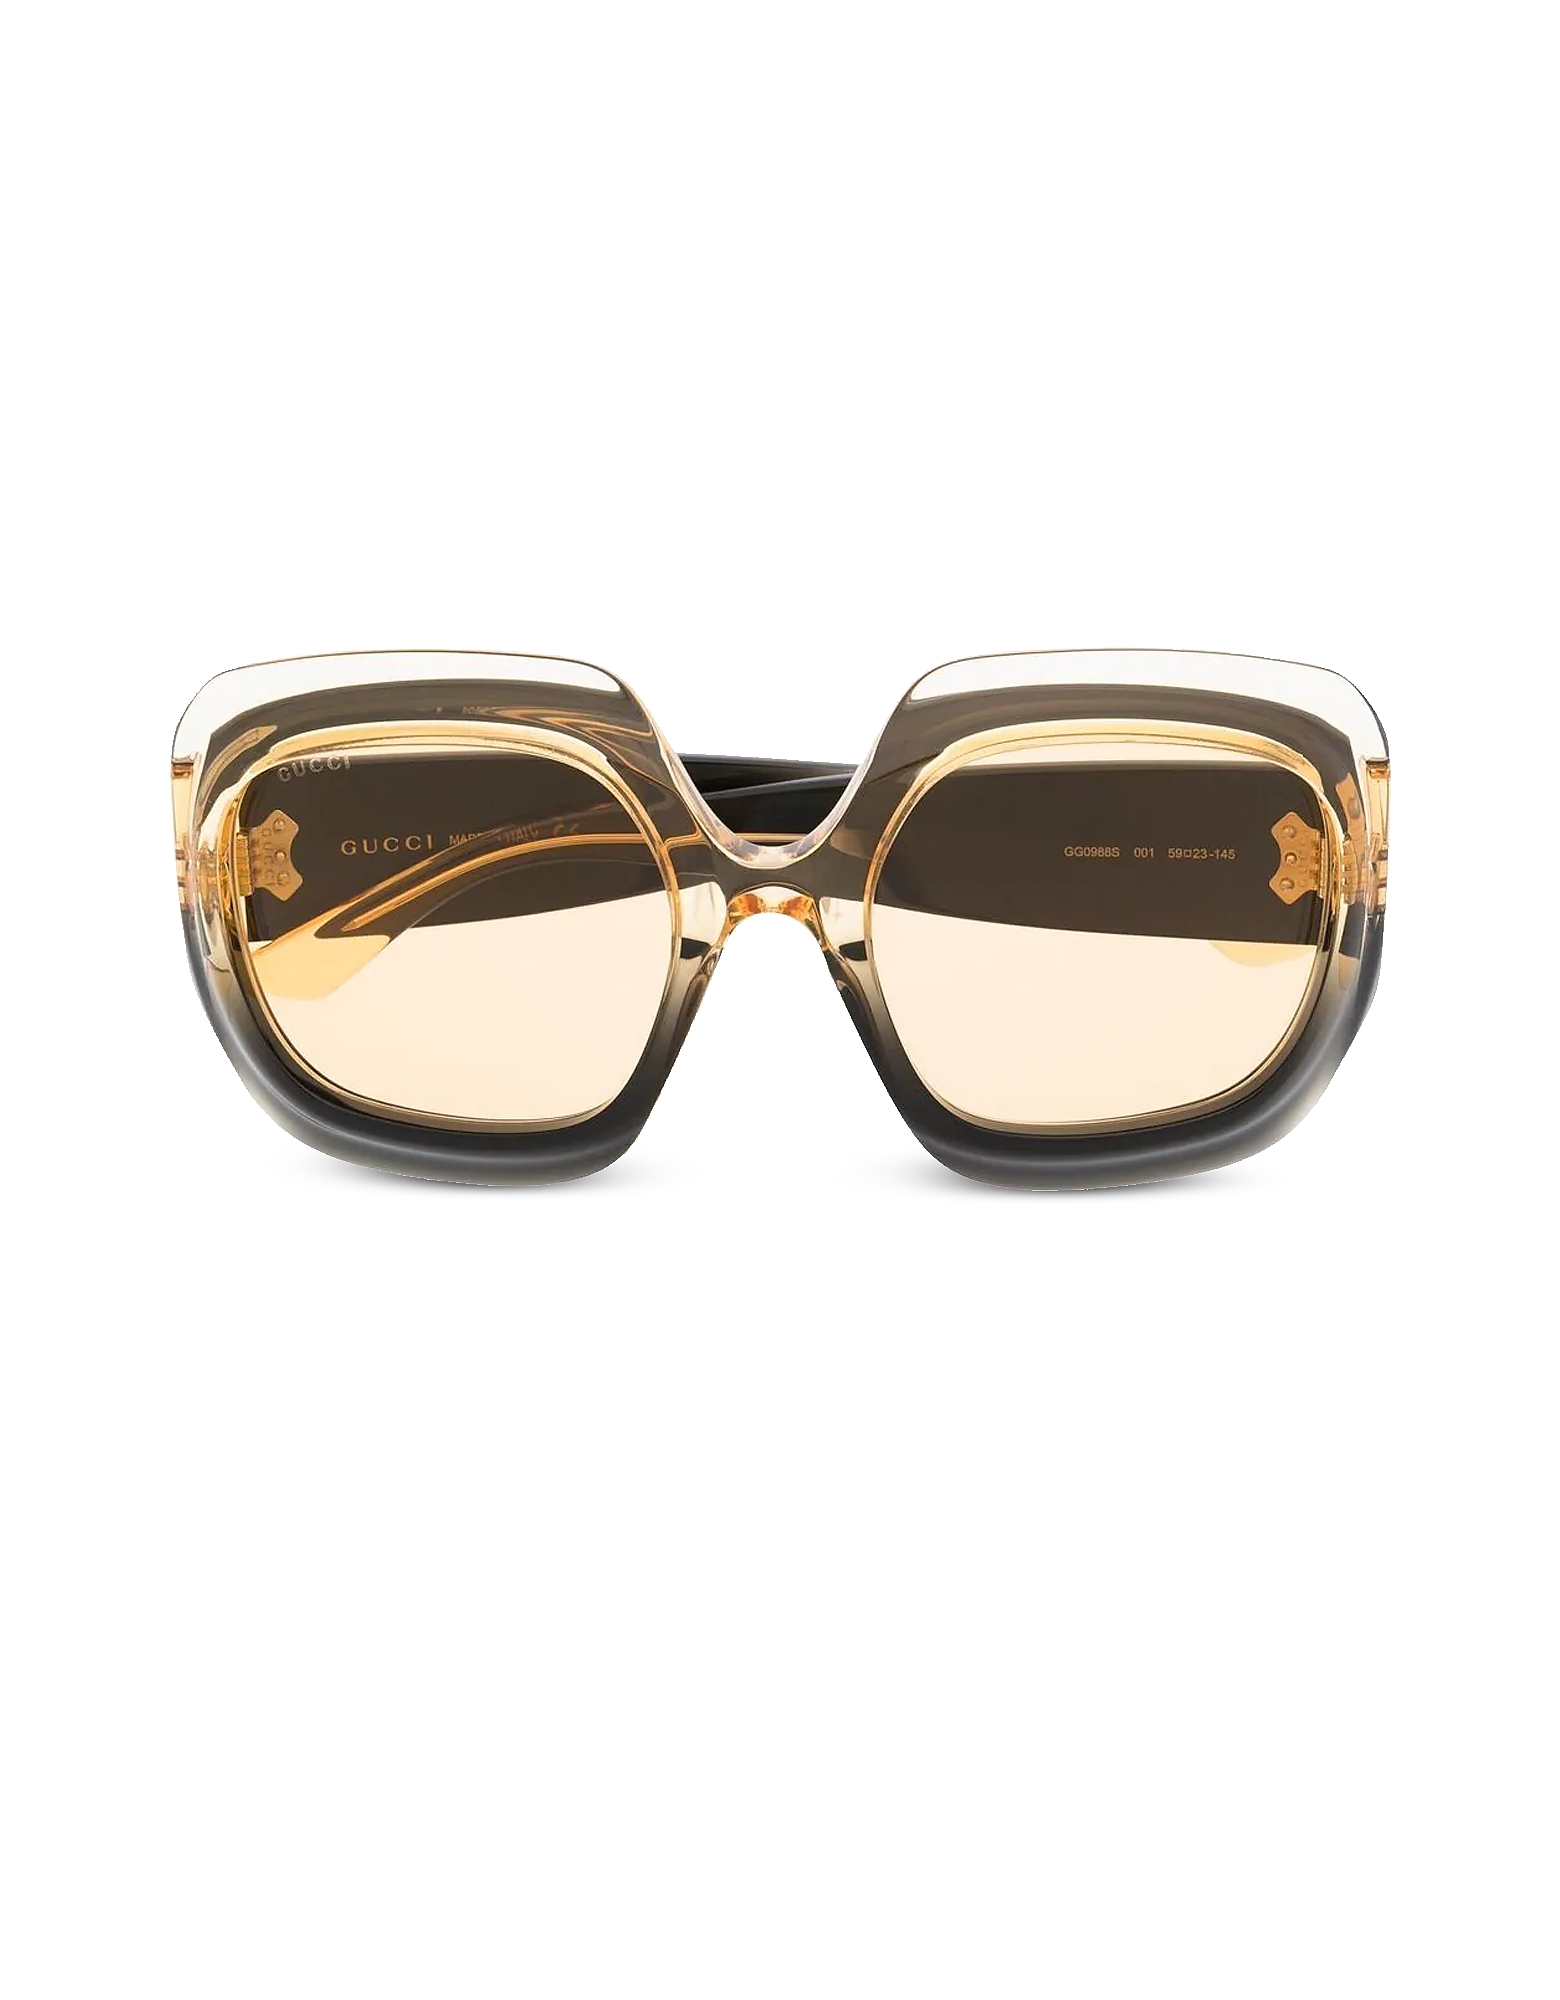 Gucci Sunglasses Black/Yellow/Transparent Square-Frame Acetate Women's Sunglasses